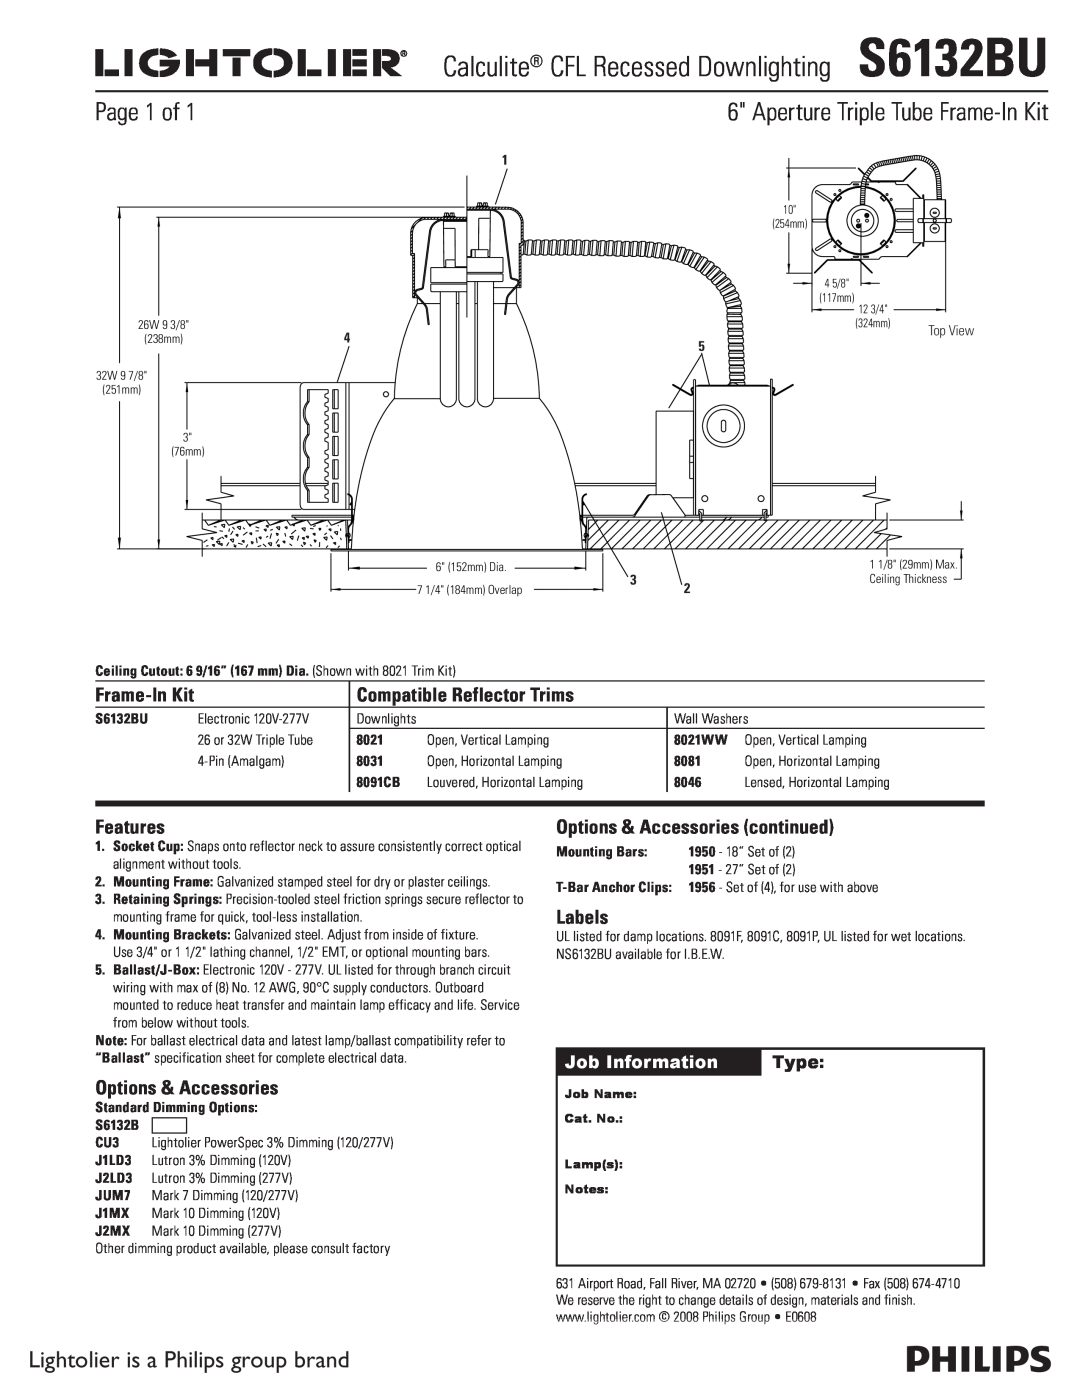 Lightolier specifications Aperture Triple Tube Frame-InKit, Calculite CFL Recessed DownlightingS6132BU, Page 1 of, Type 